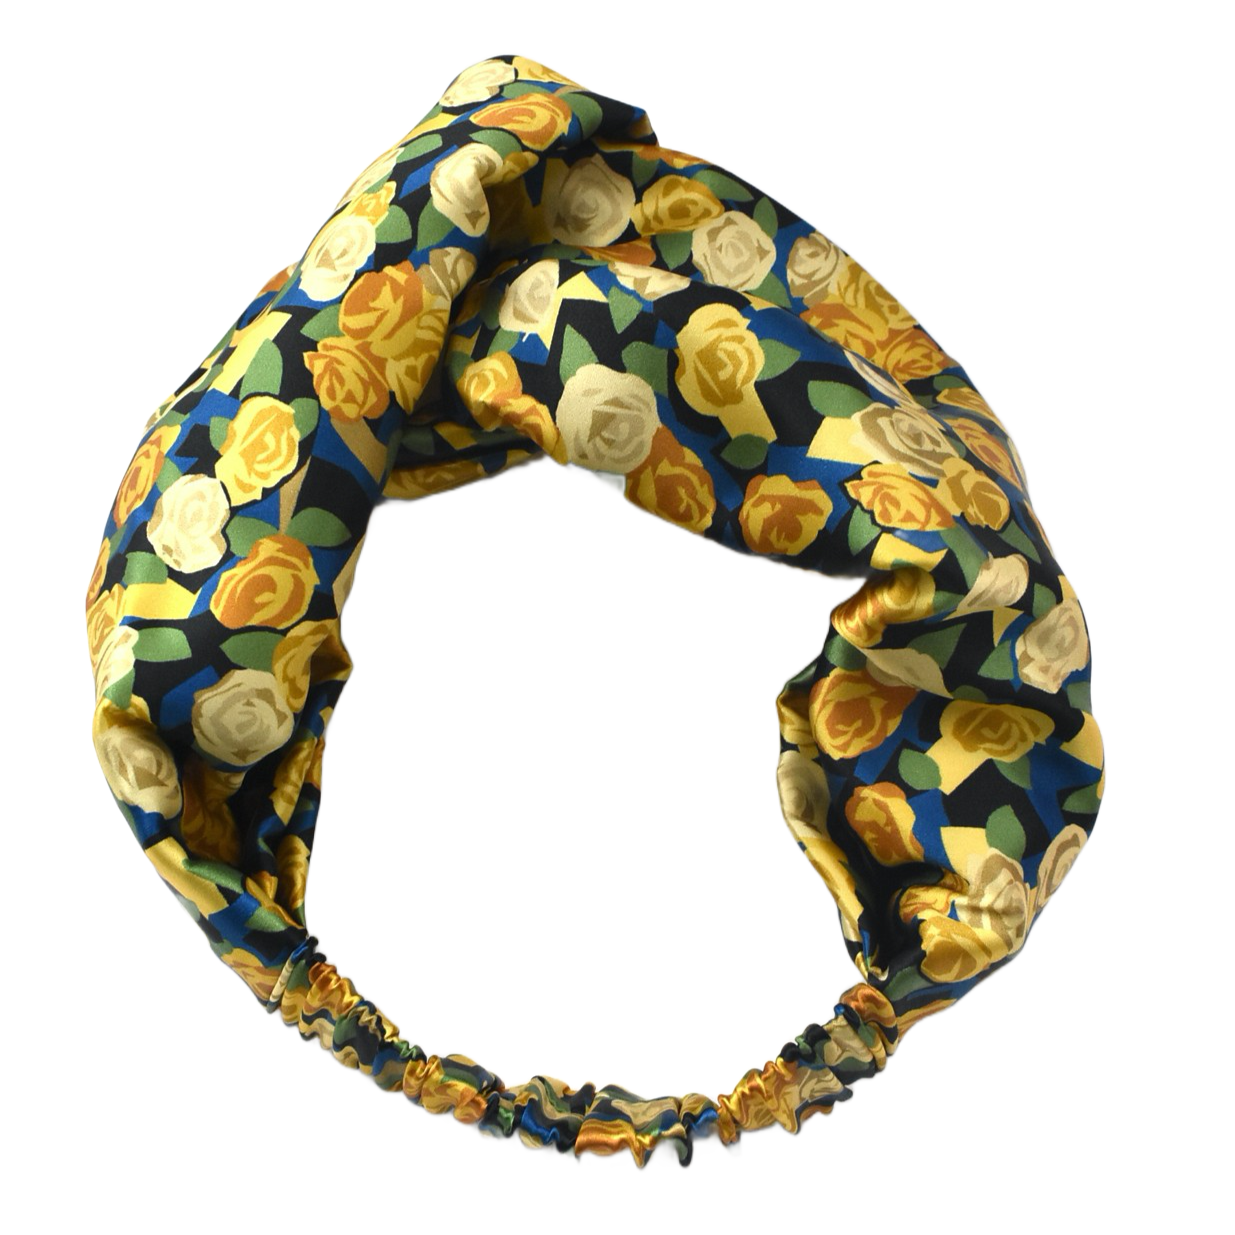 Silk Twisted Turban hairband  in Liberty of London Stone Garden Yellow Roses - 100% Silk-Satin